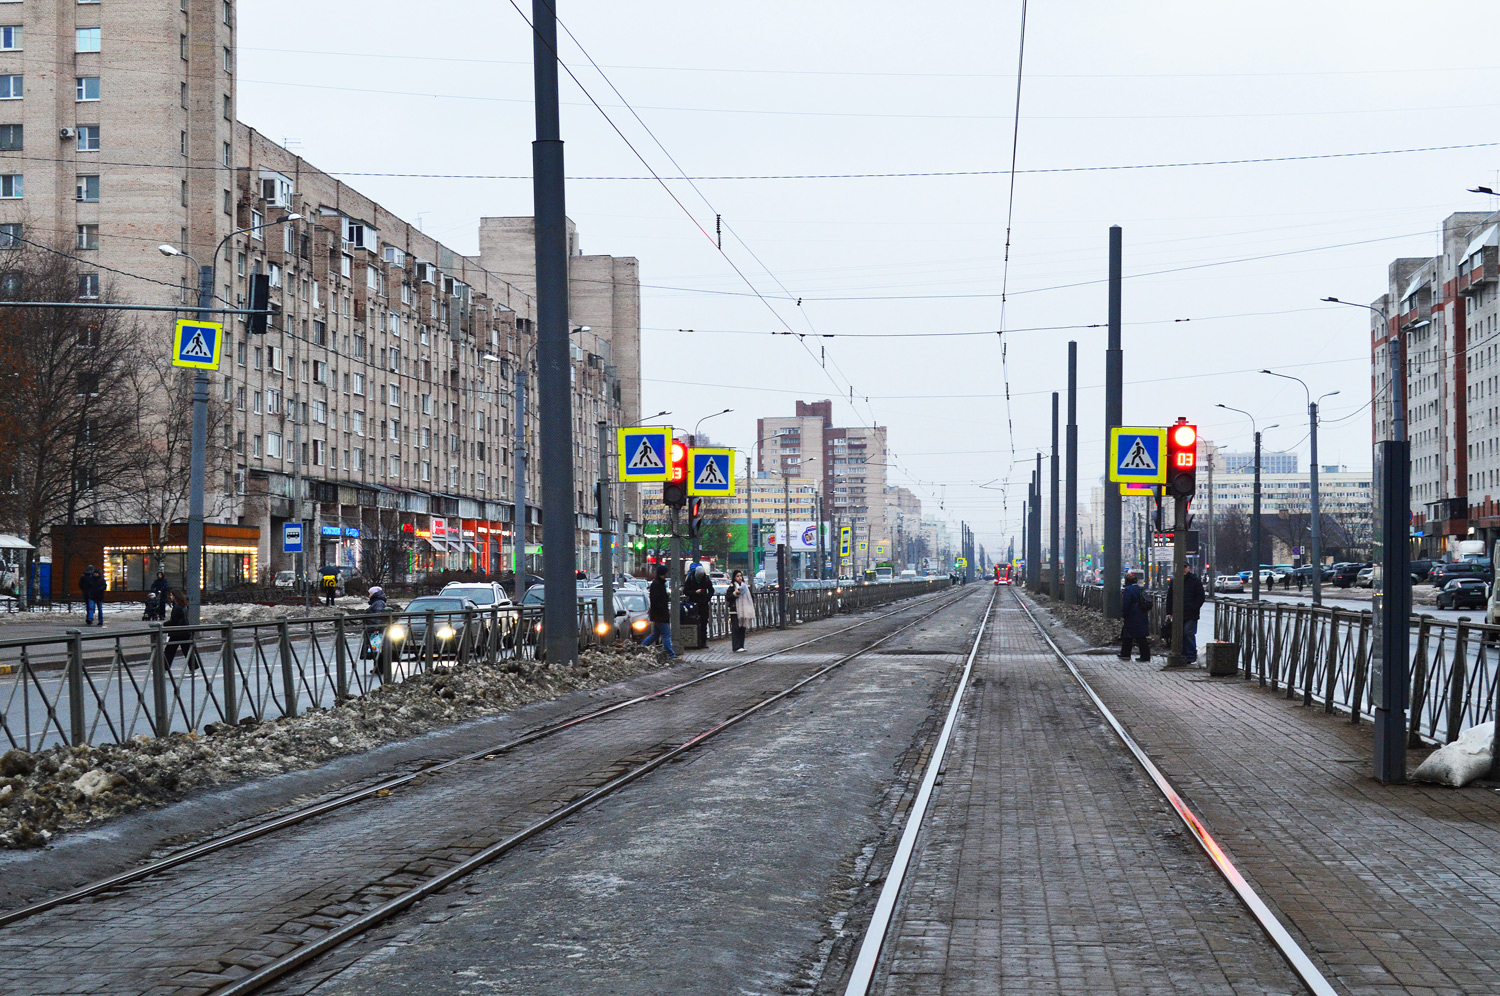 Szentpétervár — Tram lines and infrastructure